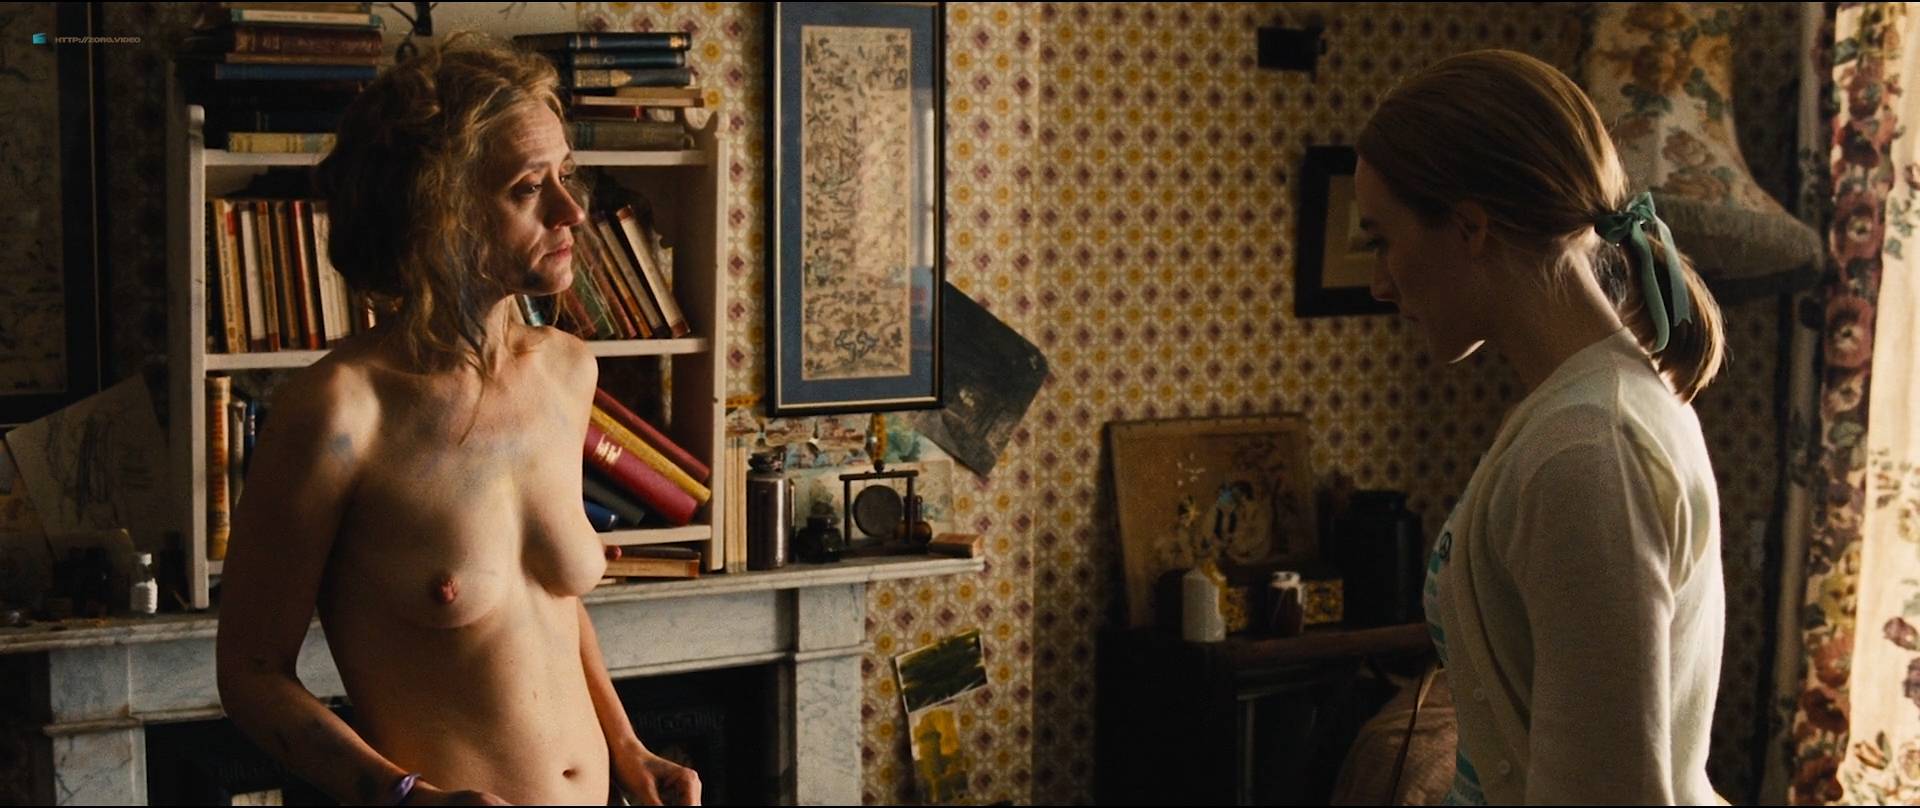 Saoirse ronan nudes - ðŸ§¡ Saoirse Ronan Nude Casting Couch Sex Tape.